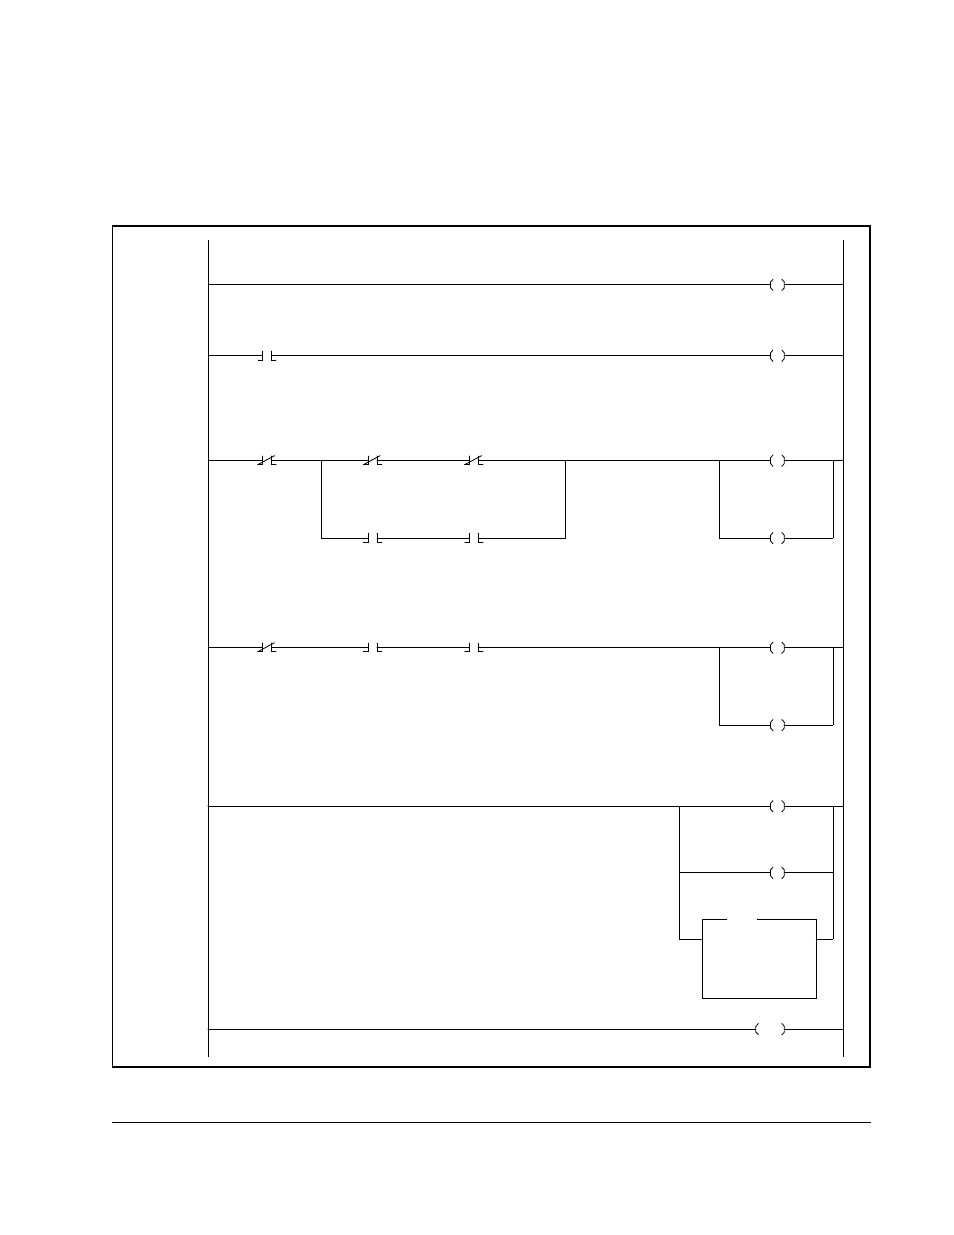 3 example slc ladder logic program | Rockwell Automation VSM500 Integrated Drive/Motor DeviceNet Option Board User Manual | Page 43 / 102